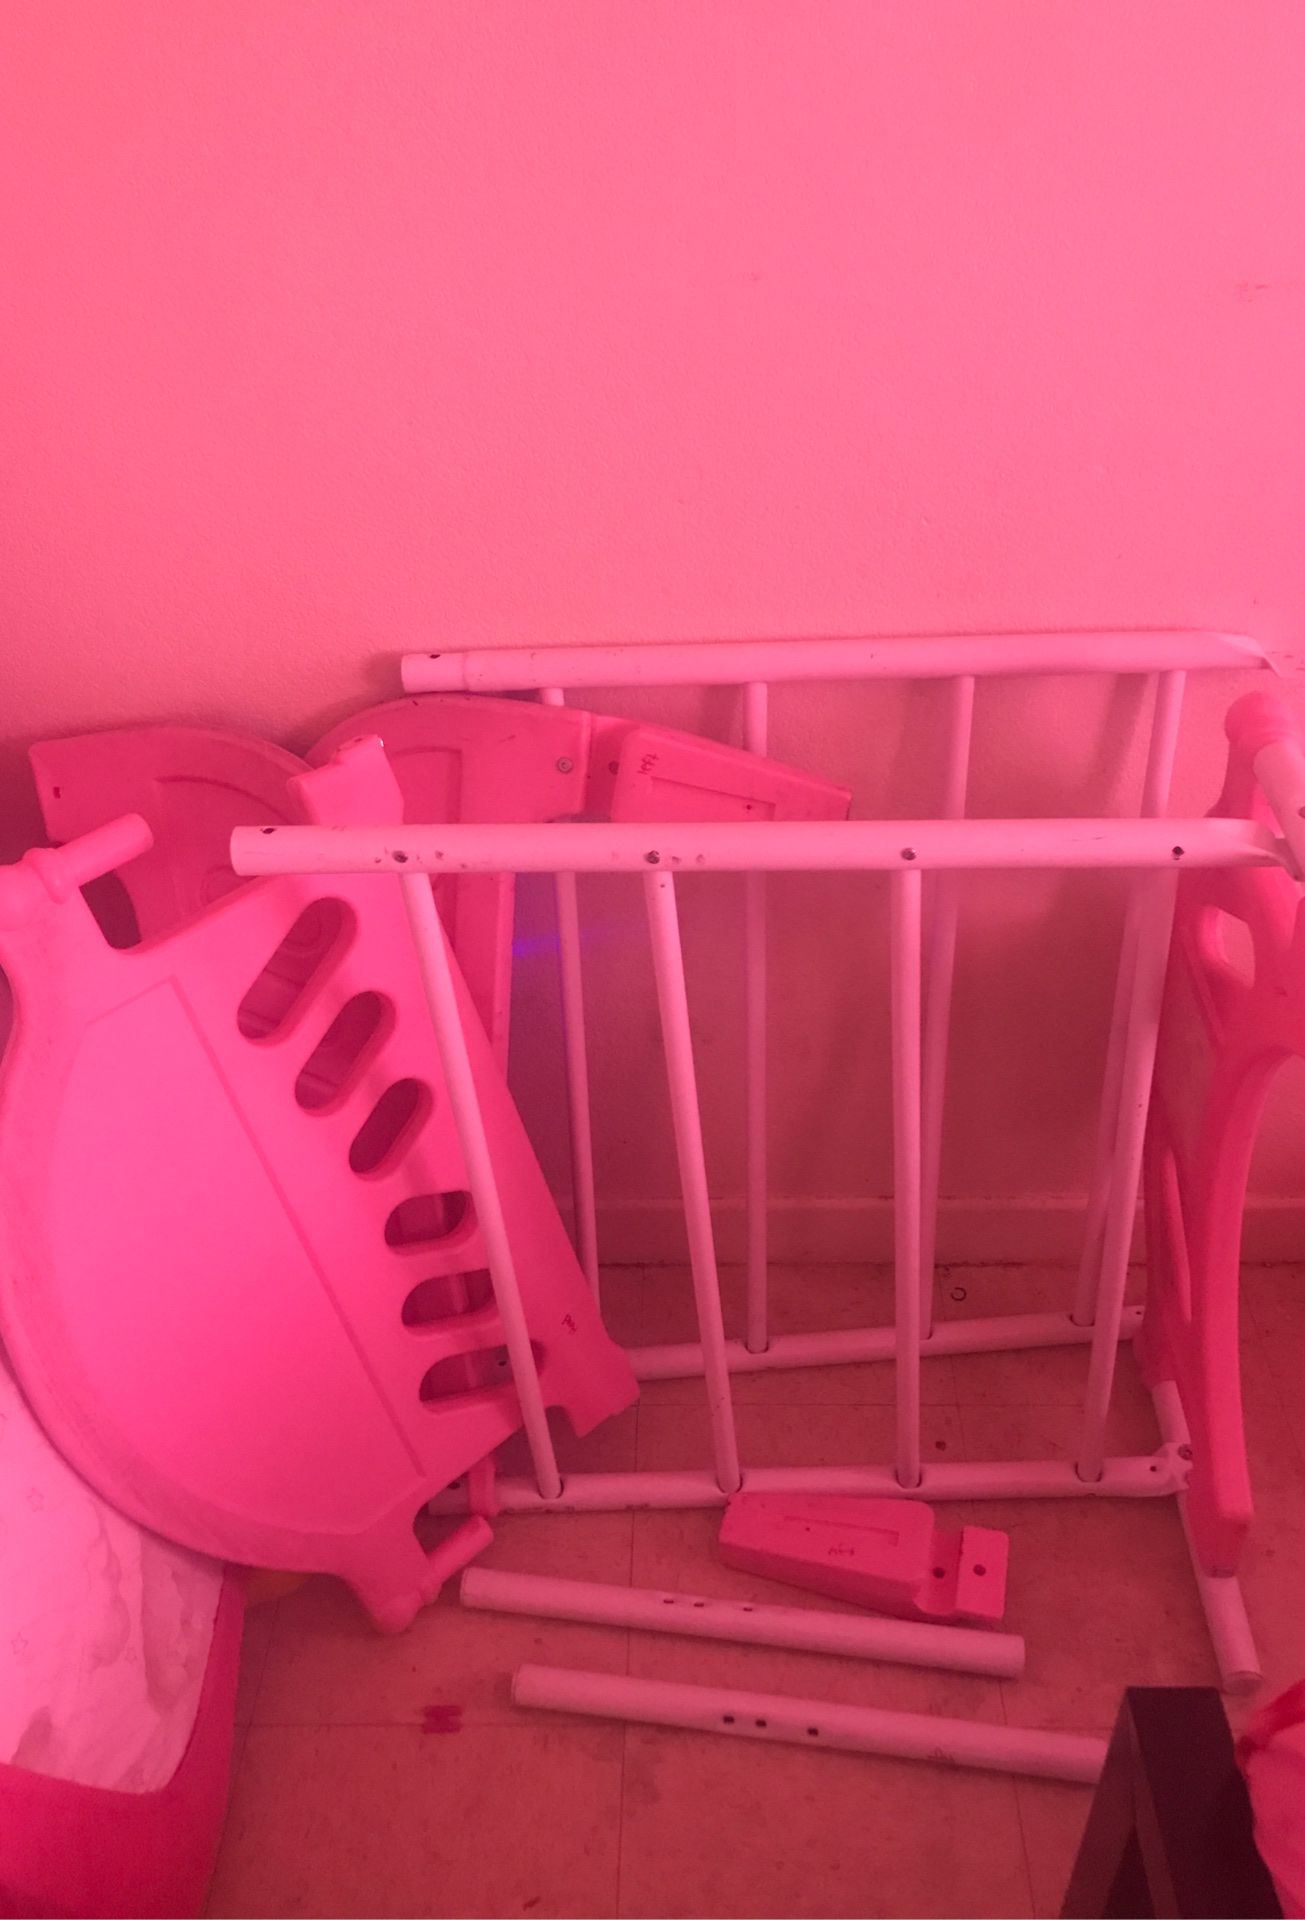 Pink toddler bed